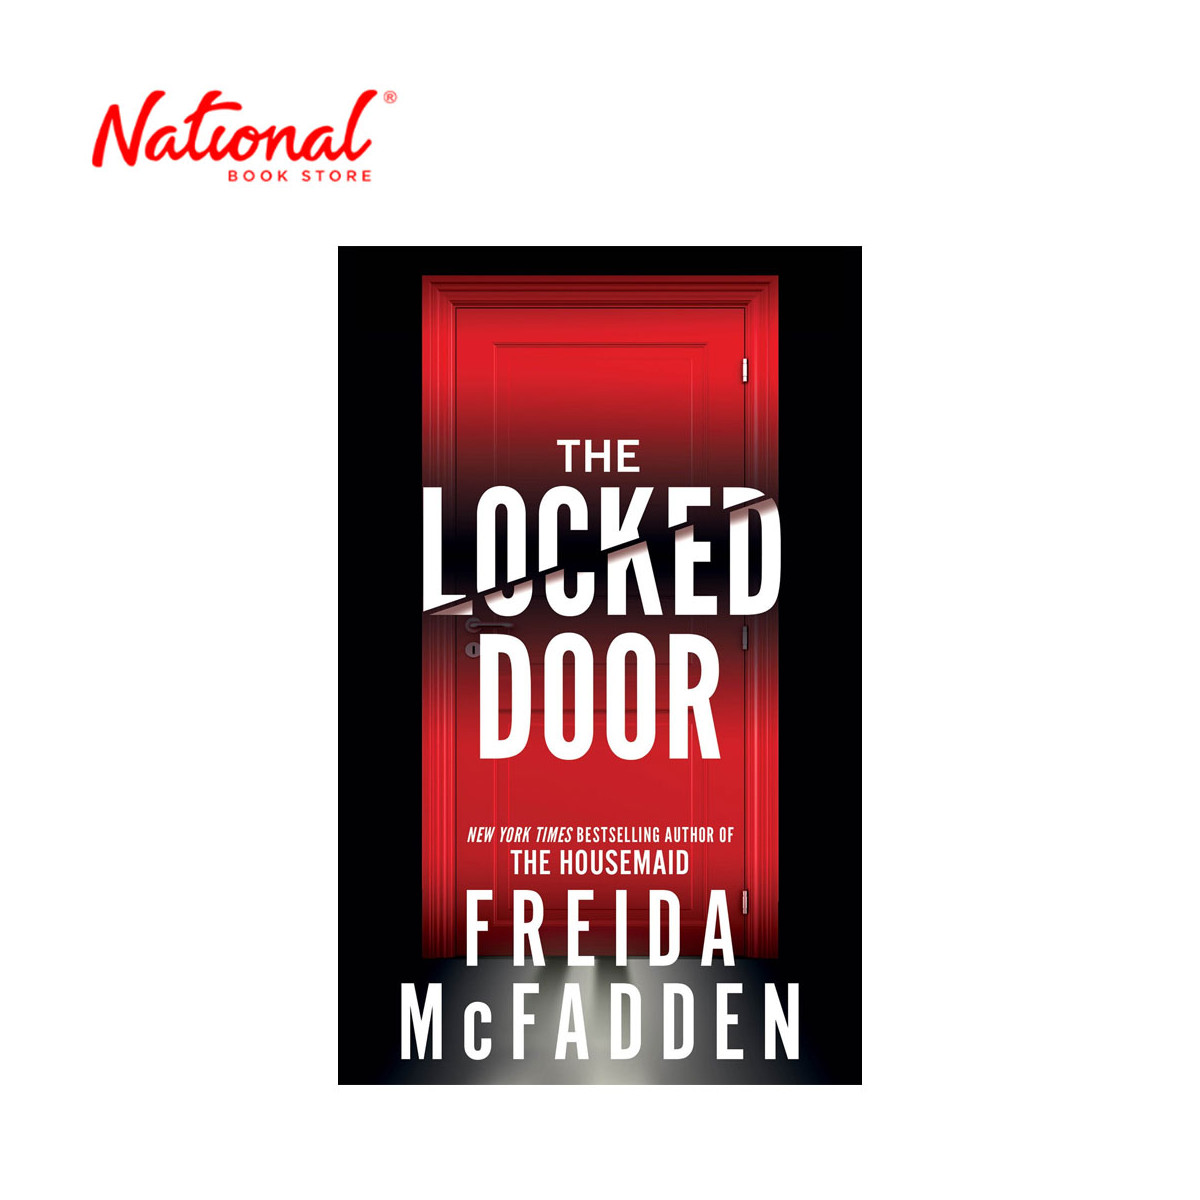 The Locked Door by Freida Mcfadden - Trade Paperback - Thriller, Mystery & Suspense